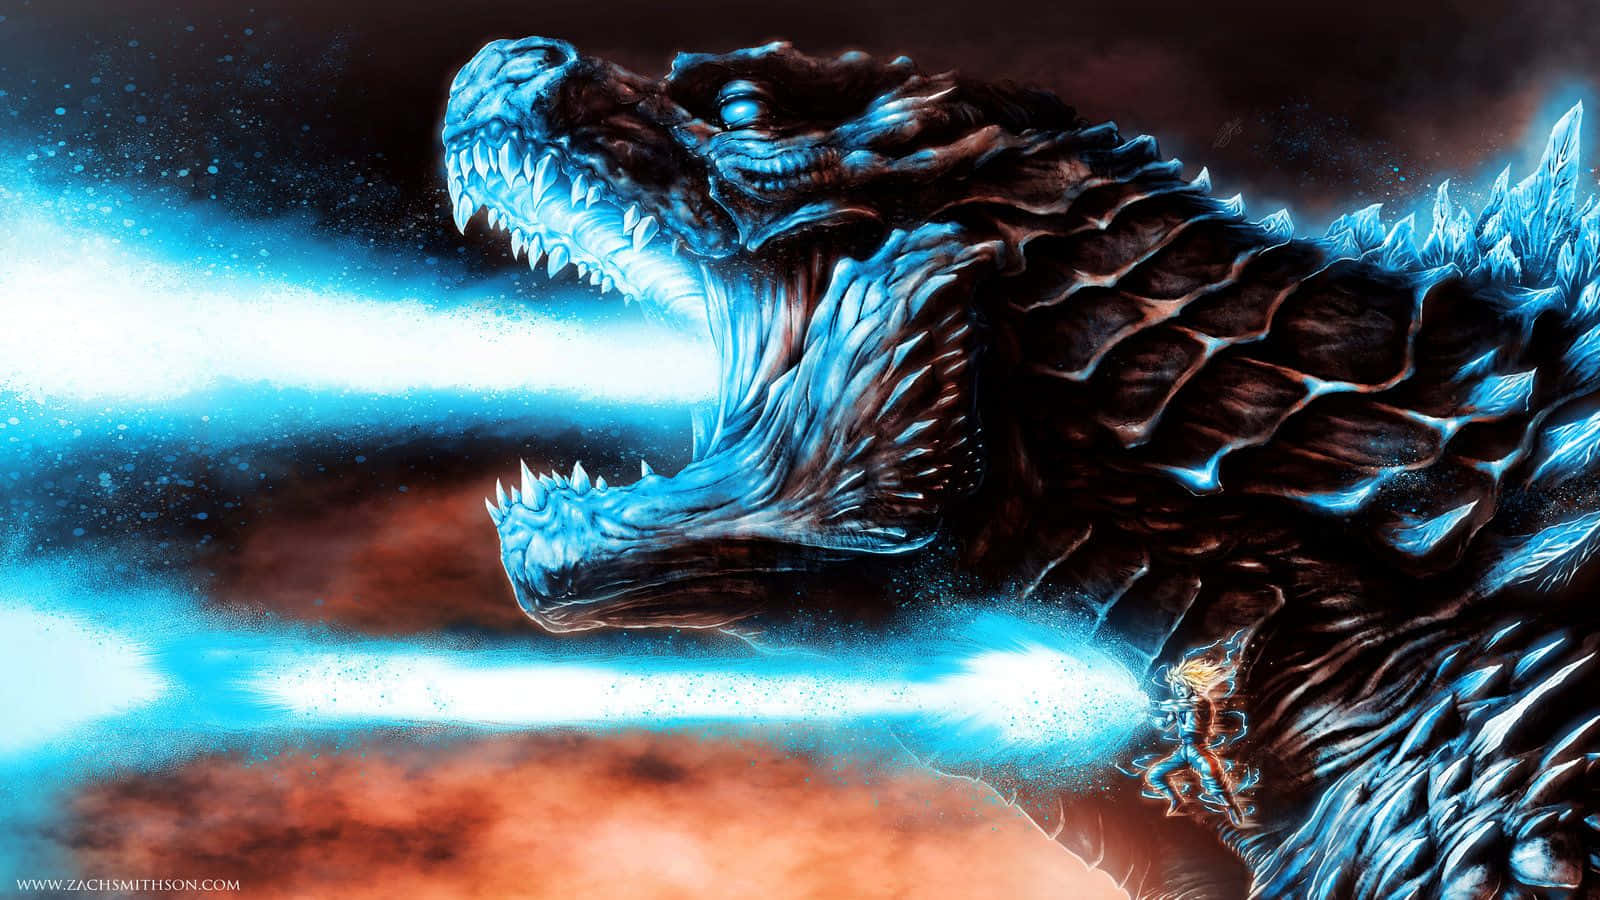 Cool Godzilla - The Legendary King of Monsters Wallpaper